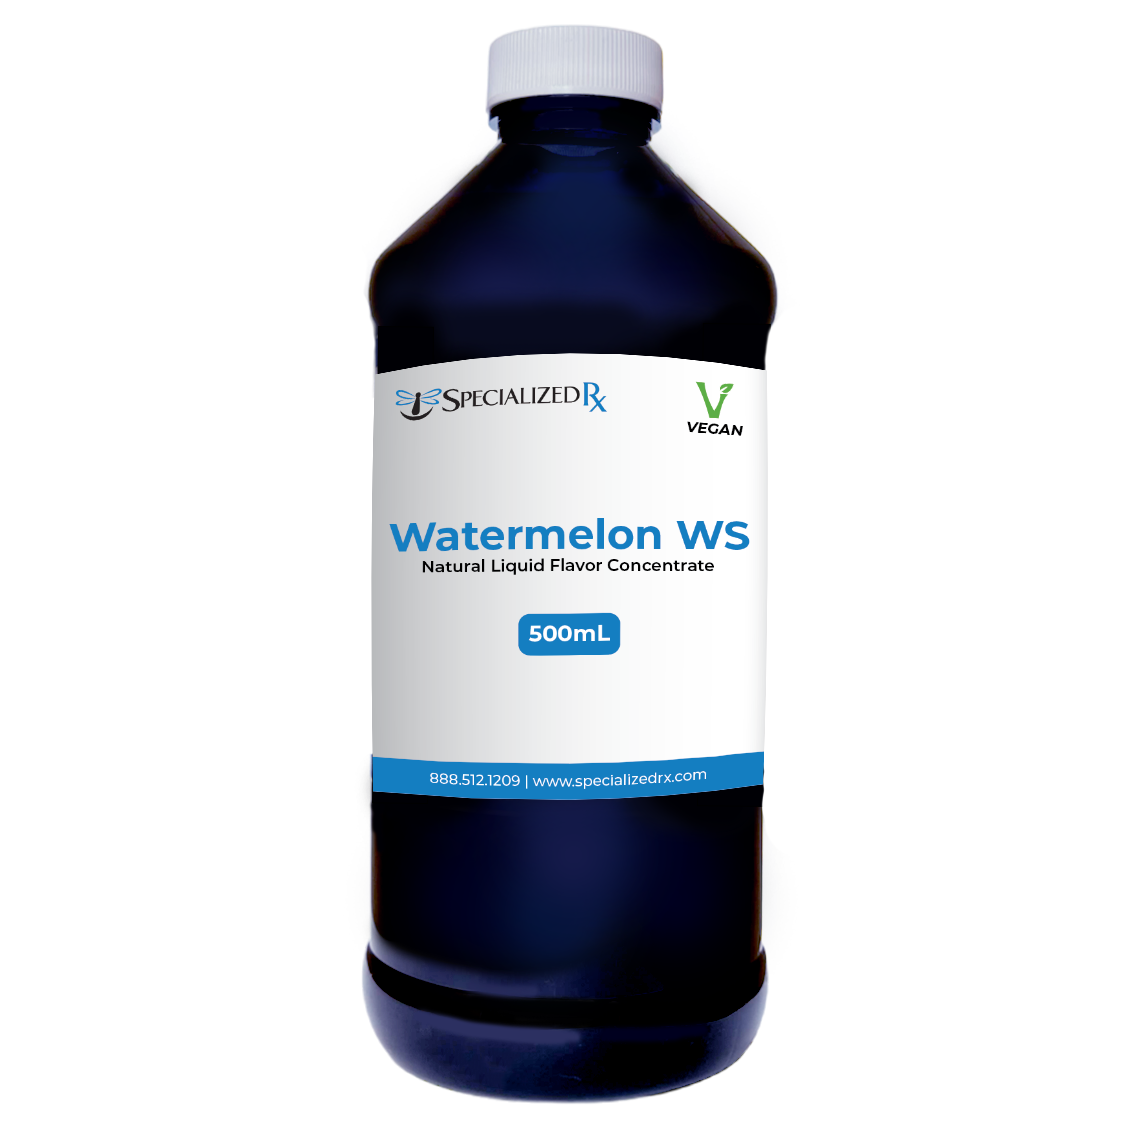 Watermelon WS Natural Liquid Flavor Concentrate